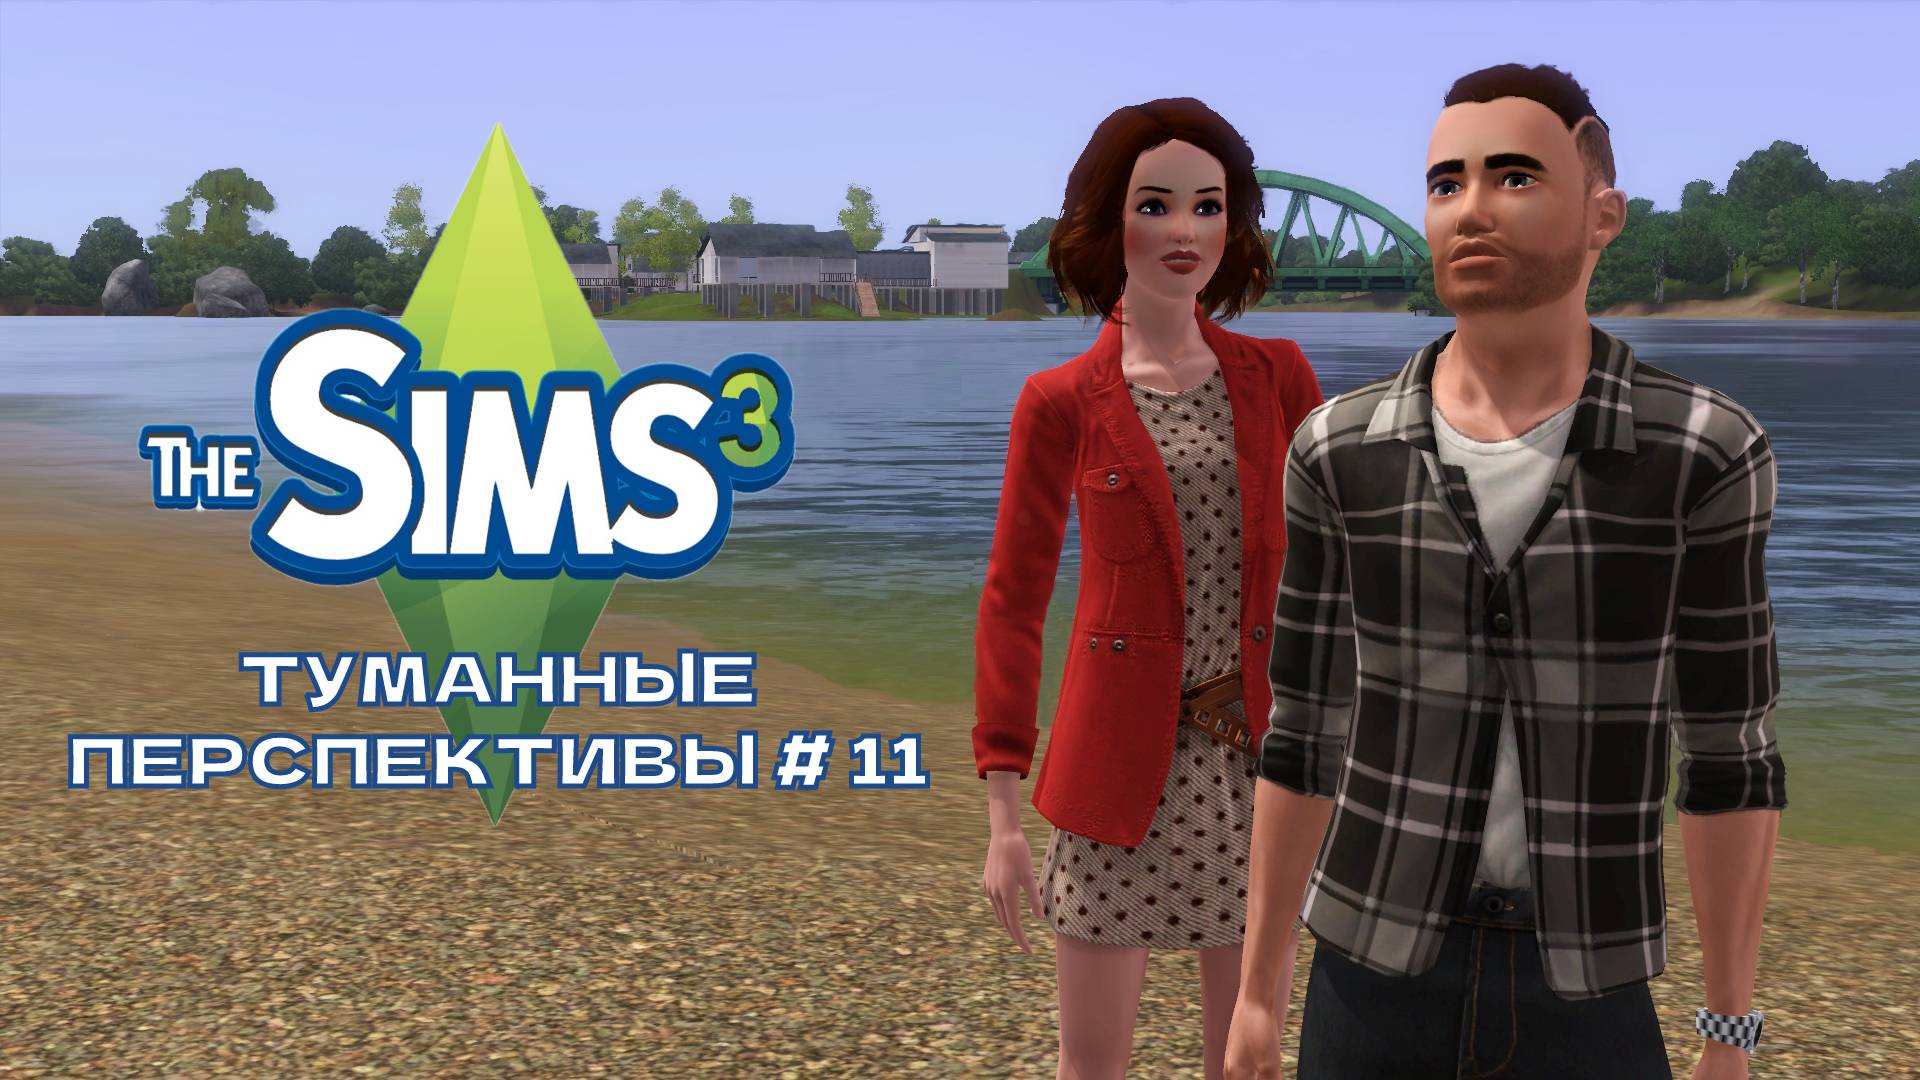 The Sims 3. Туманные перспективы #11.Рубим двери, спасаем людей